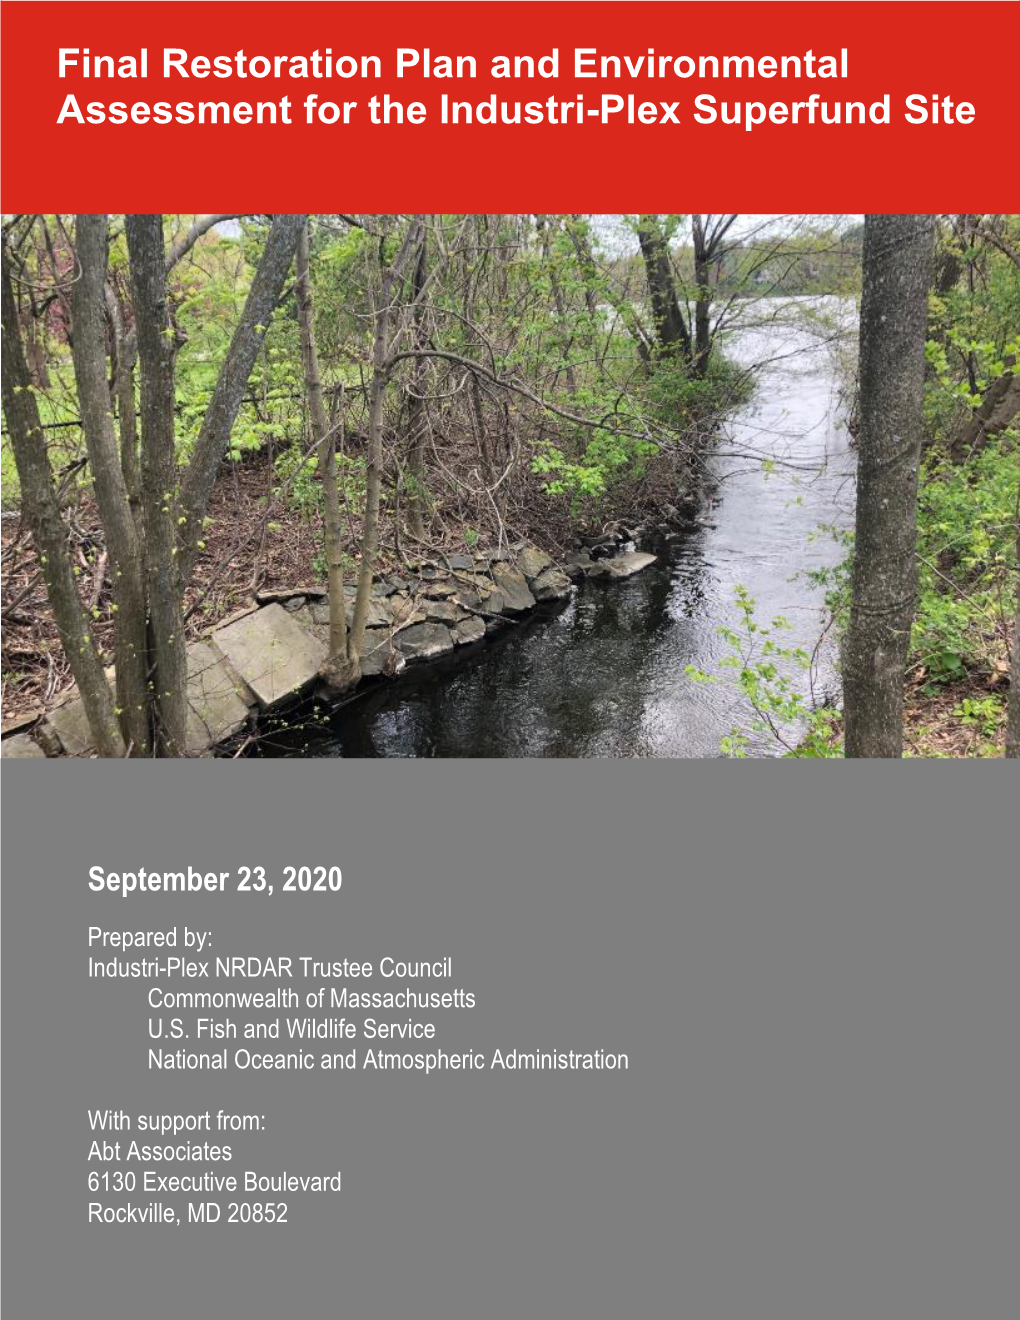 Final Restoration Plan and Environmental Assessment for the Industri-Plex Superfund Site in Woburn, Massachusetts